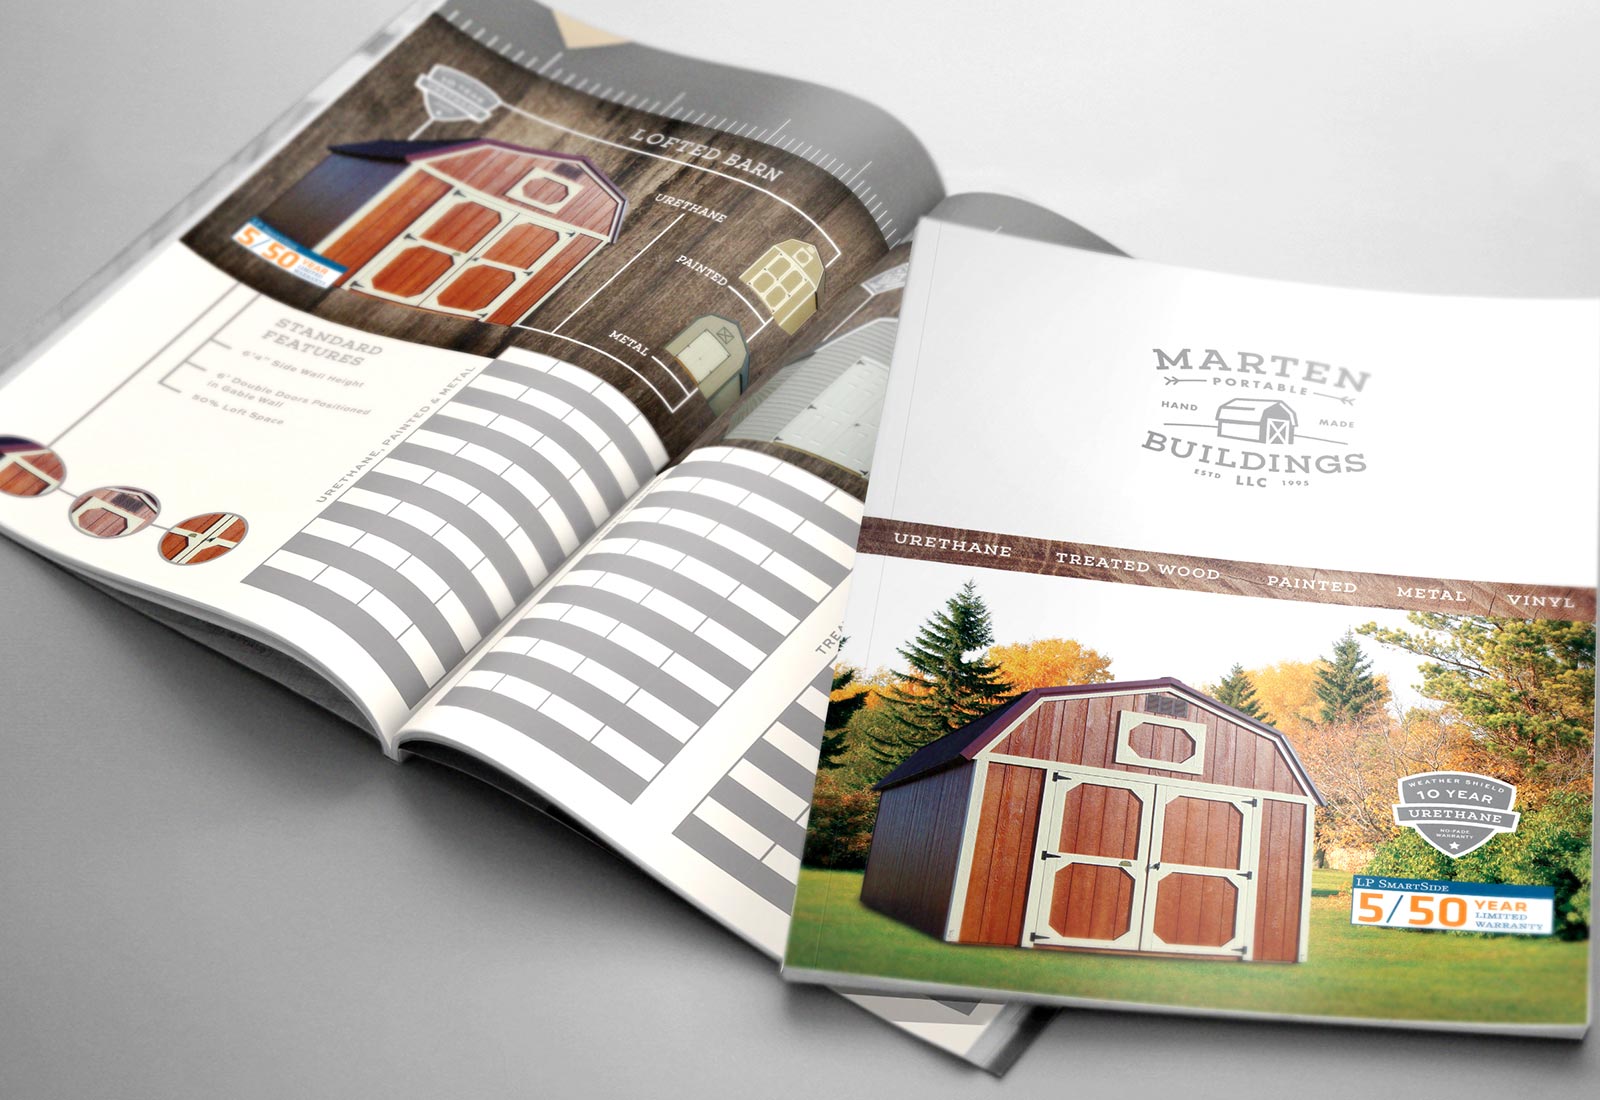 Marten Portable Buildings Catalog Design